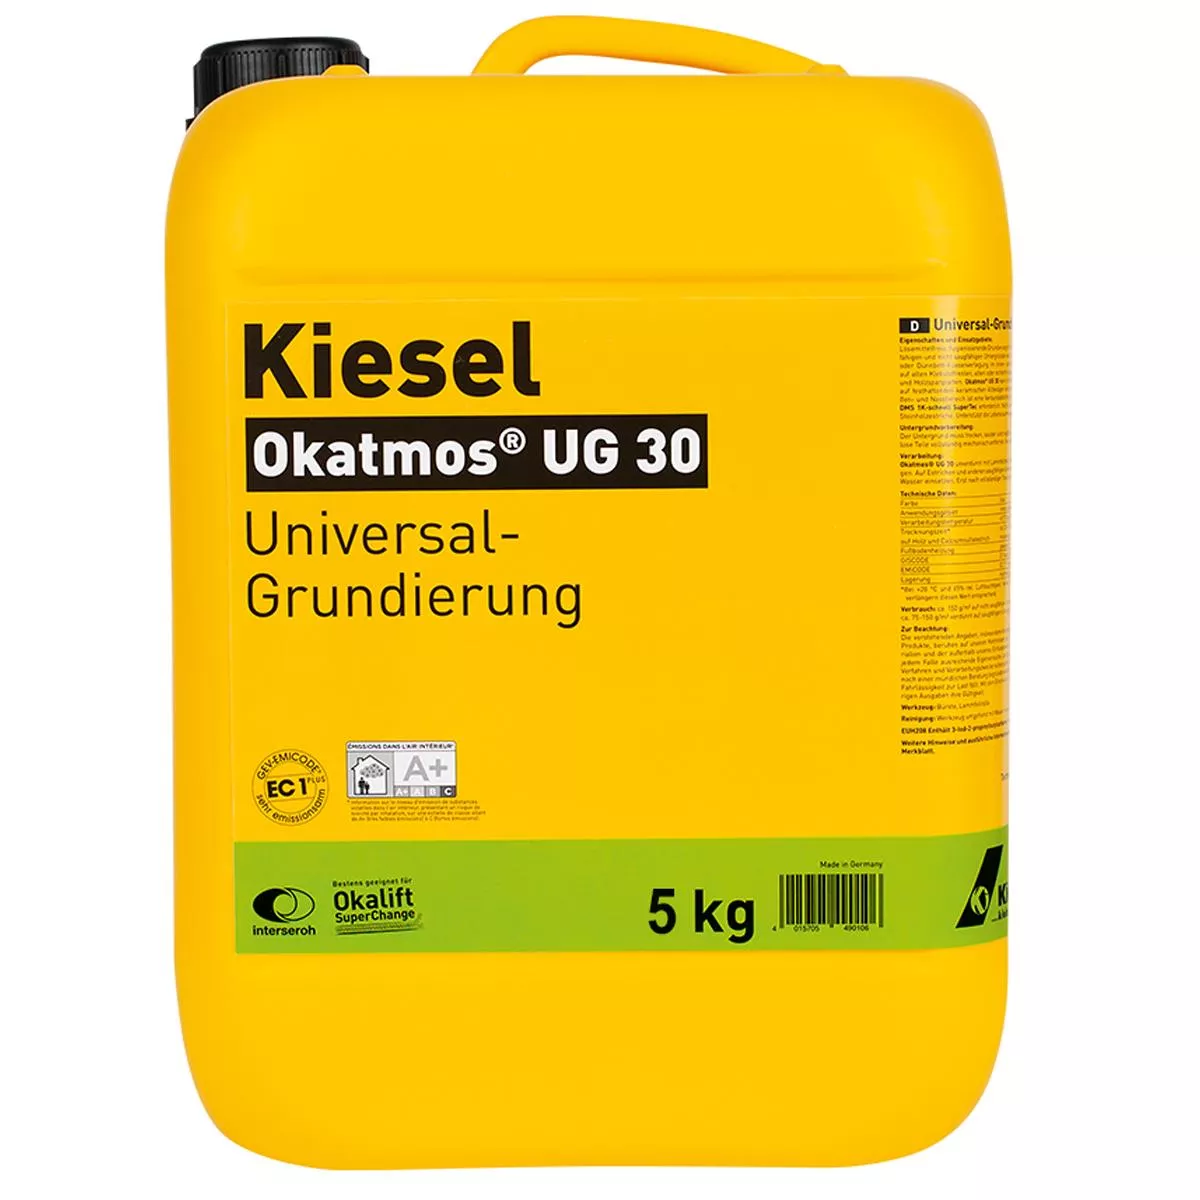 Universal Grundierung Kiesel Okatmos UG 30 Blau 5 kg